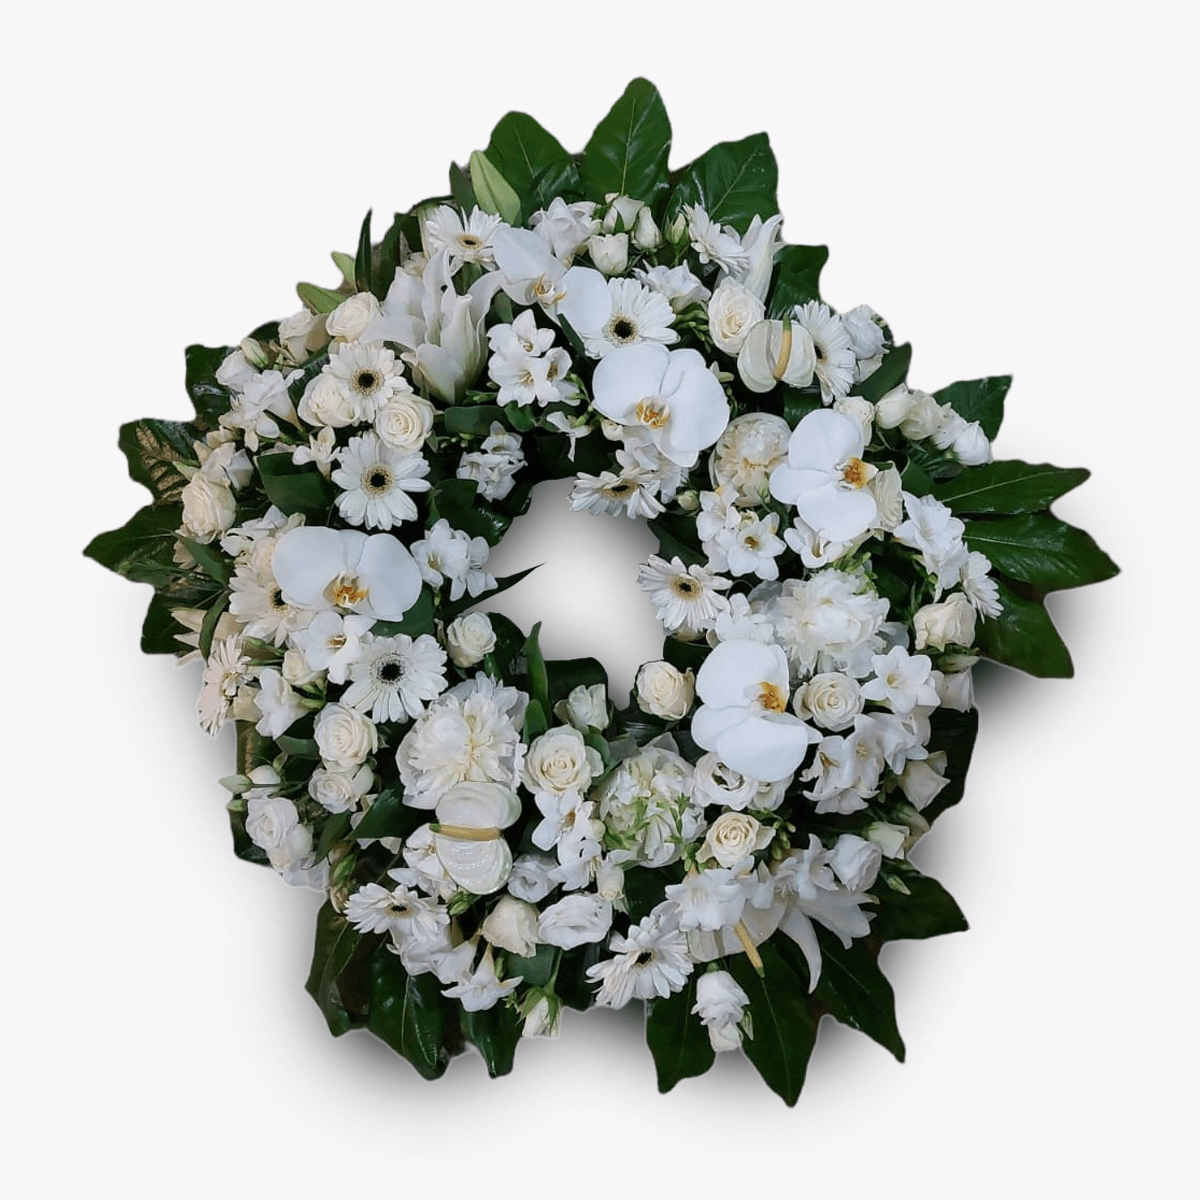 Coroana funerara cu 20 minigerbera, 20 frezii albe, 5 lisianthus alb, 10 anthurium alb